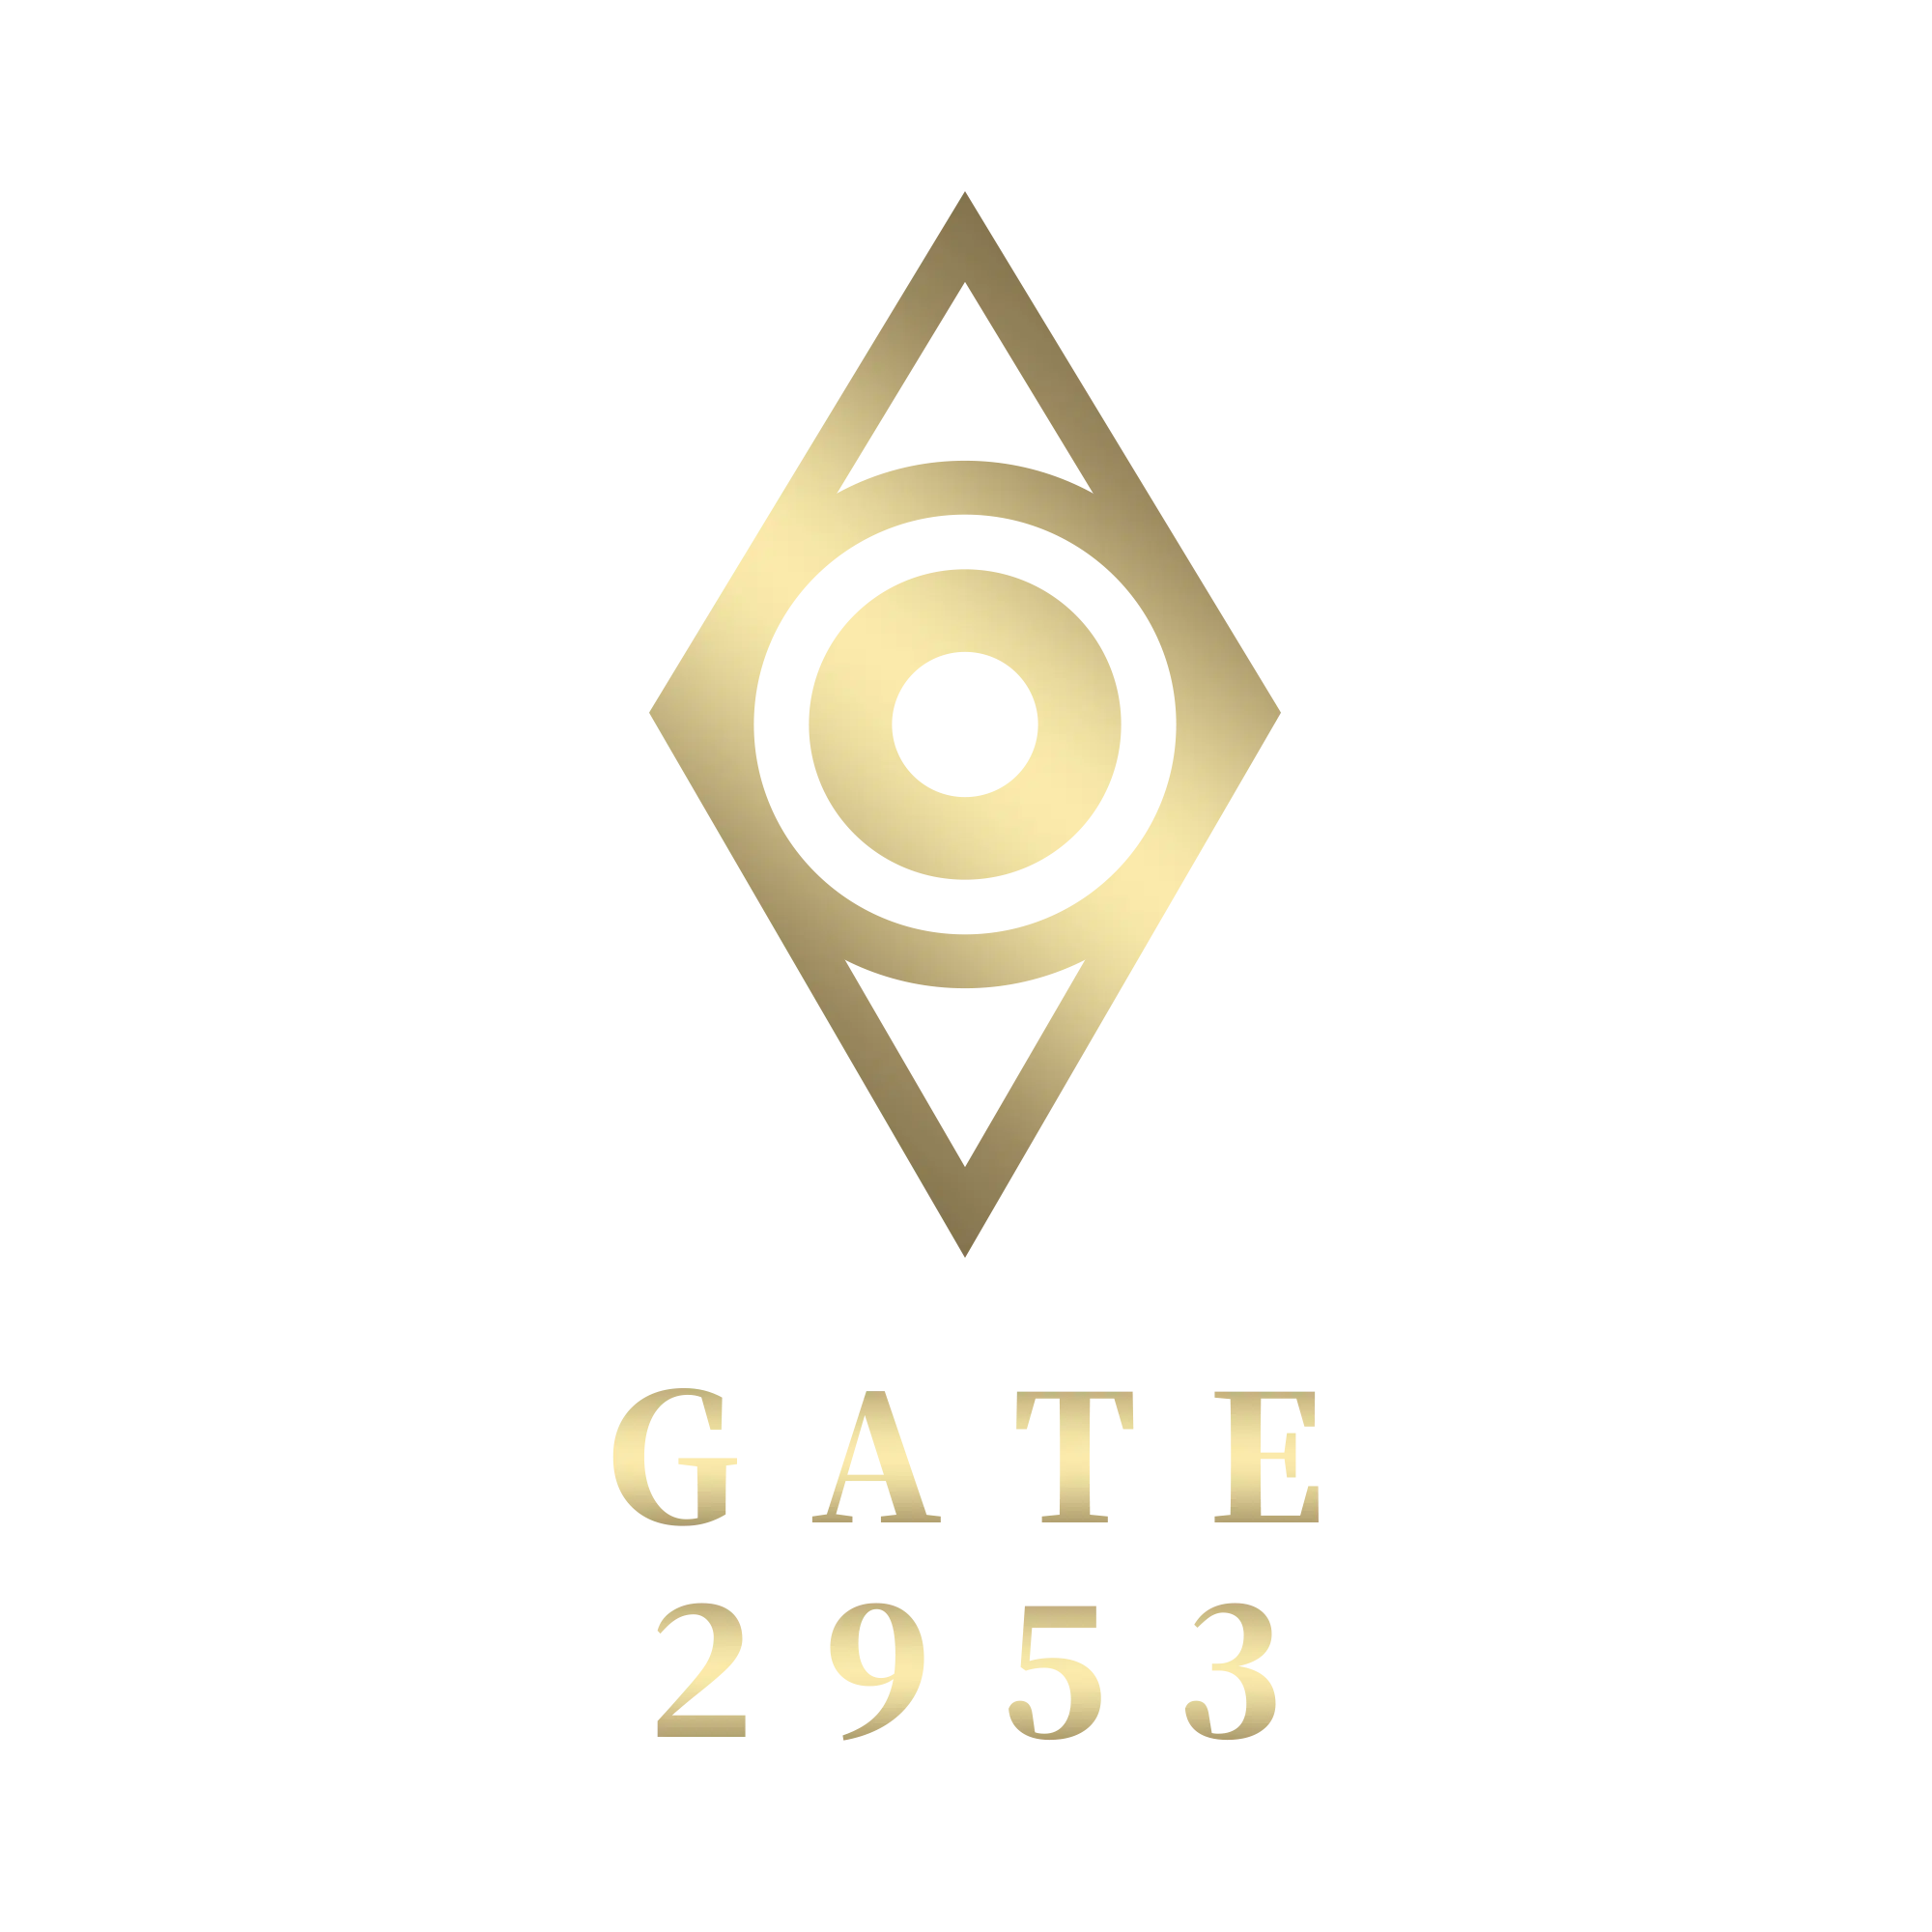 門 GATE 2953 Logo